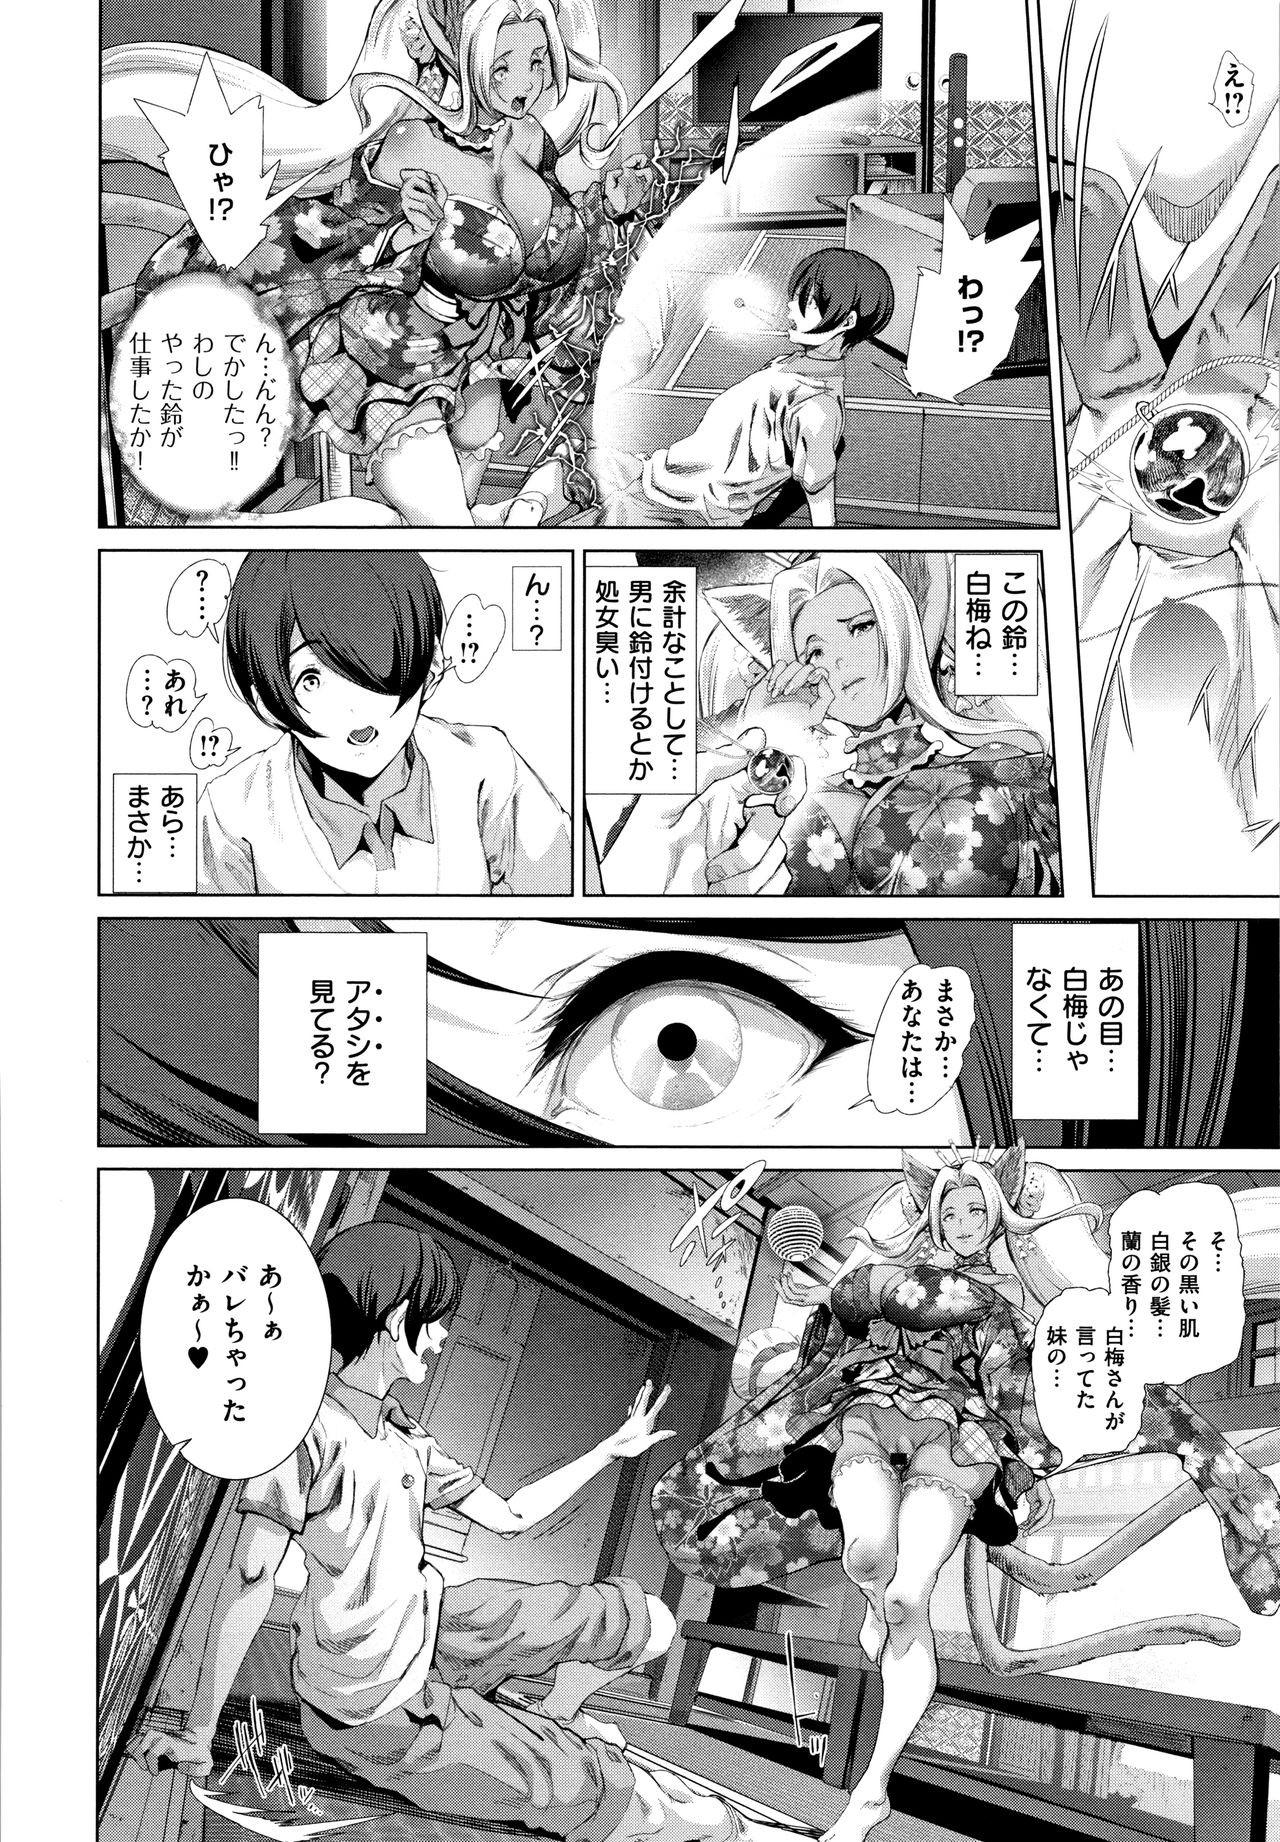 [Suzuhane Suzu] Cos wa Midara na Kamen Shogyouban - Cosplay is a mask [wakes up erotic personality...] 126